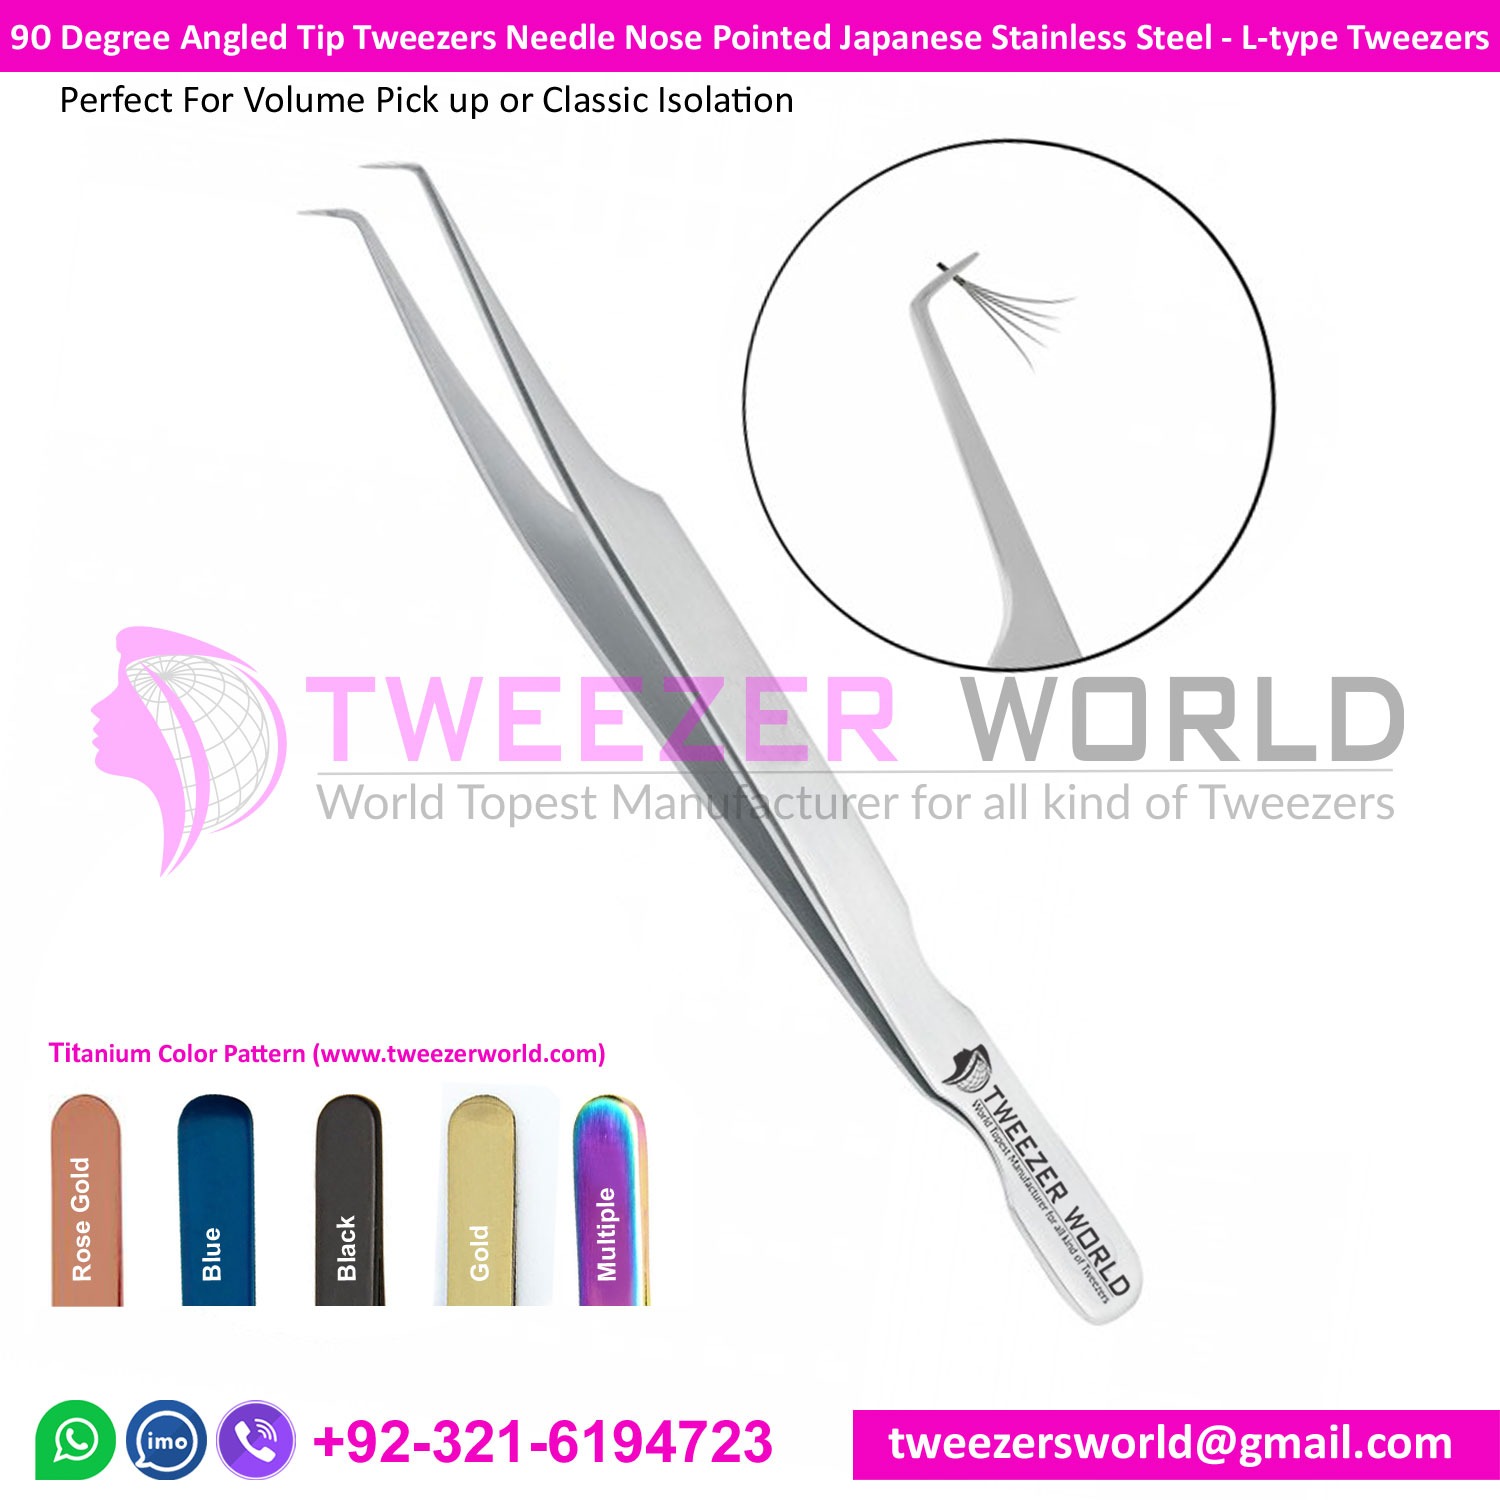 S-Shape 90 Degree Angled Tweezers Needle Pointed L-type Tweezers